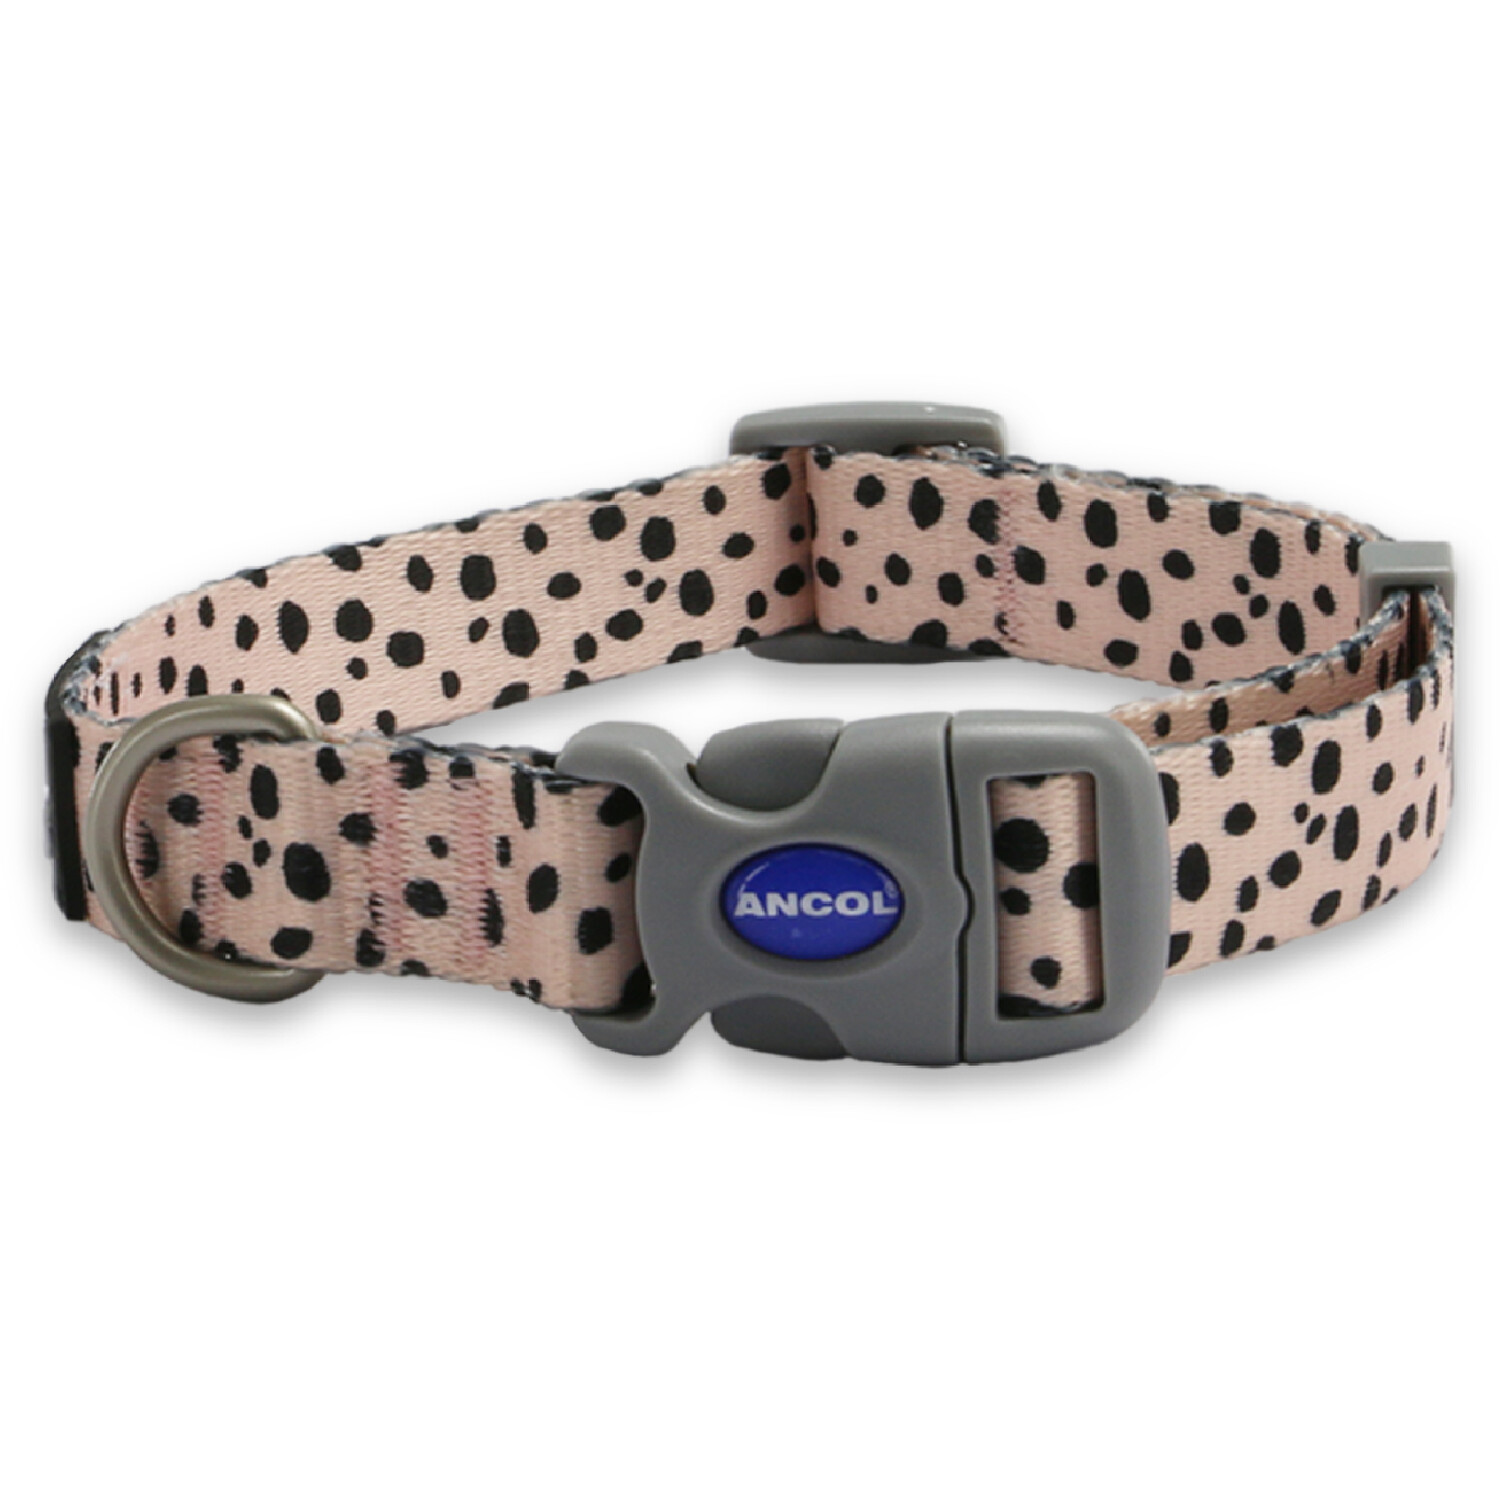 Dalmatian Patterned Dog Collar - Neutral / 30 - 50cm Neck Image